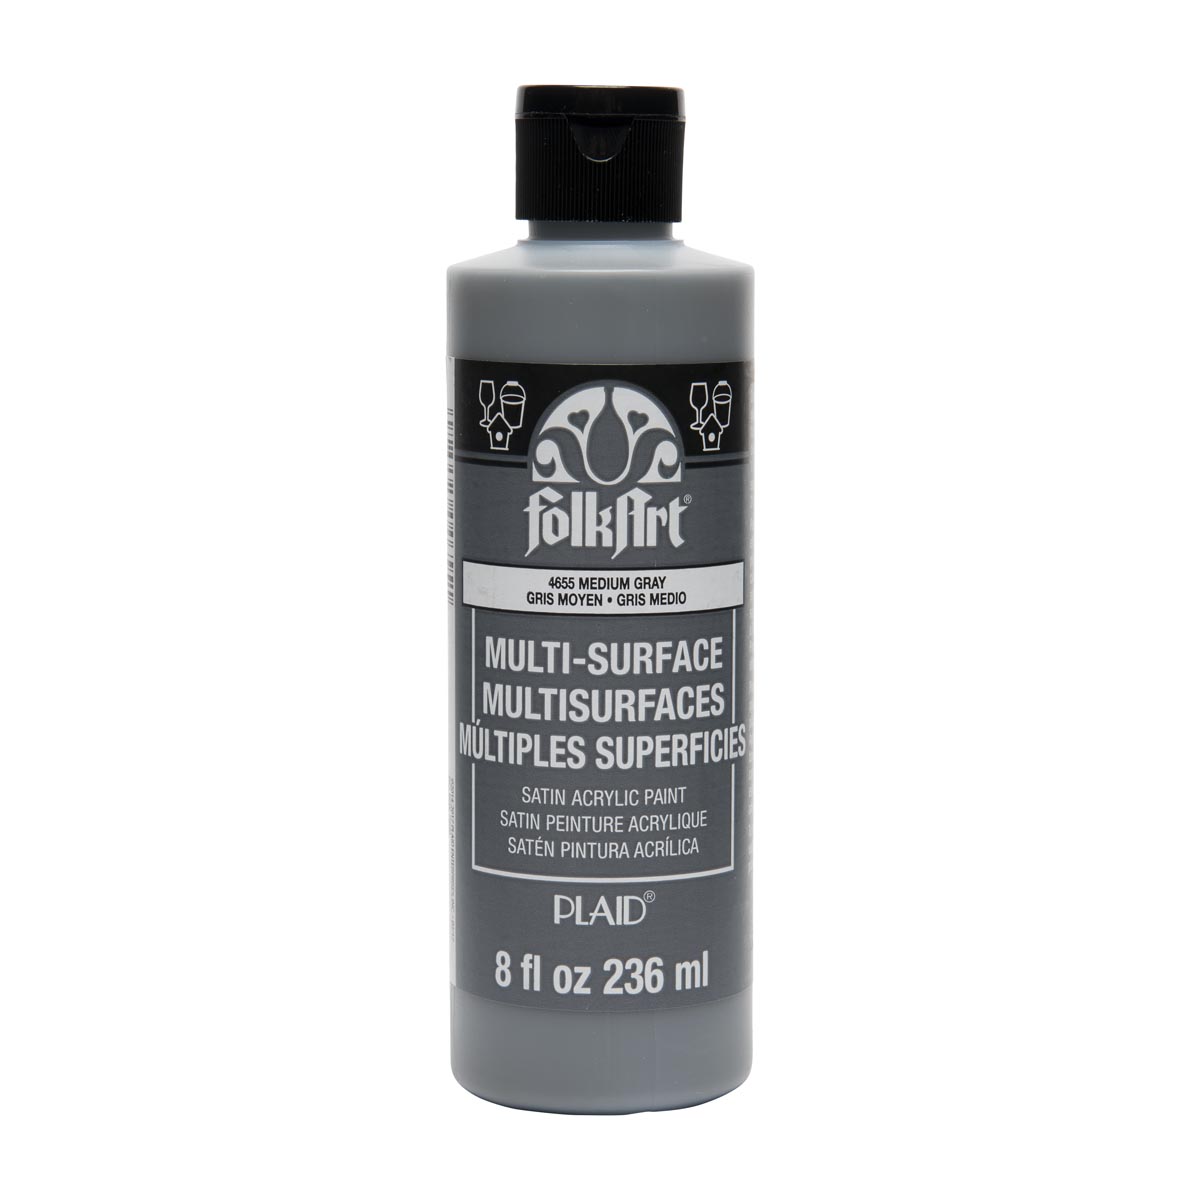 FolkArt ® Multi-Surface Satin Acrylic Paints - Medium Gray, 8 oz. - 4655